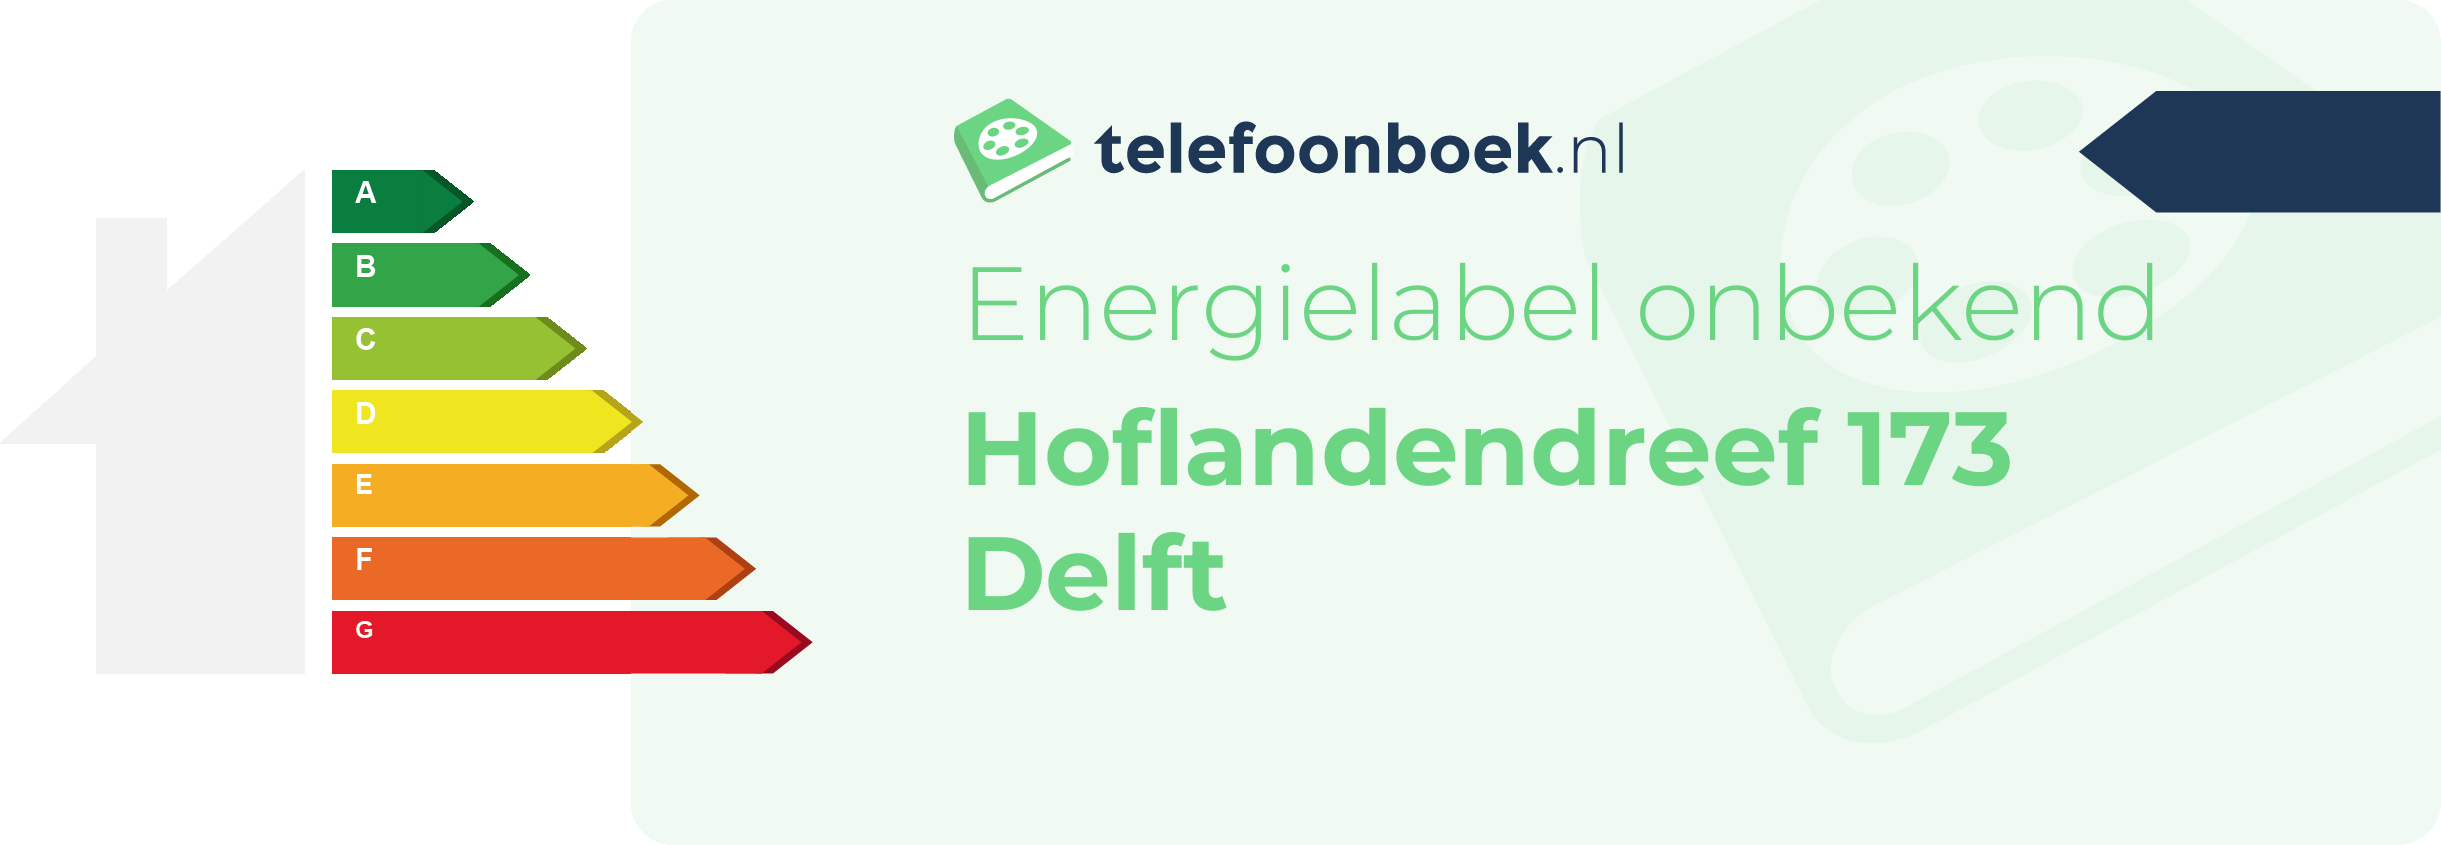 Energielabel Hoflandendreef 173 Delft